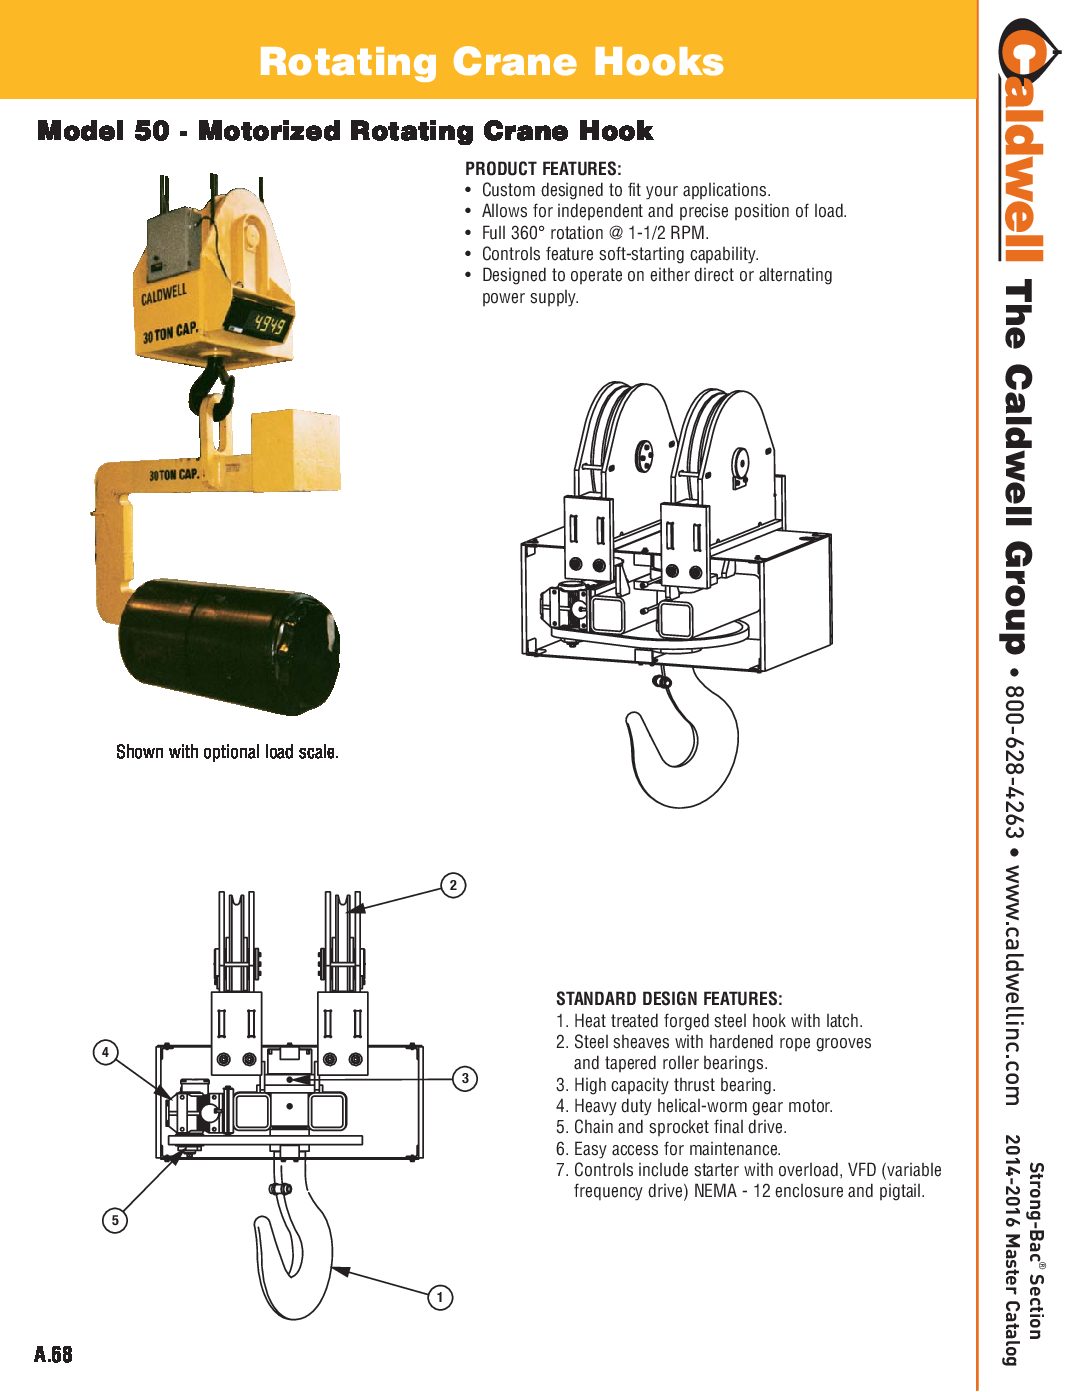 Caldwell STRONG BAC Rotating Crane Hook Spread Sheet pdf